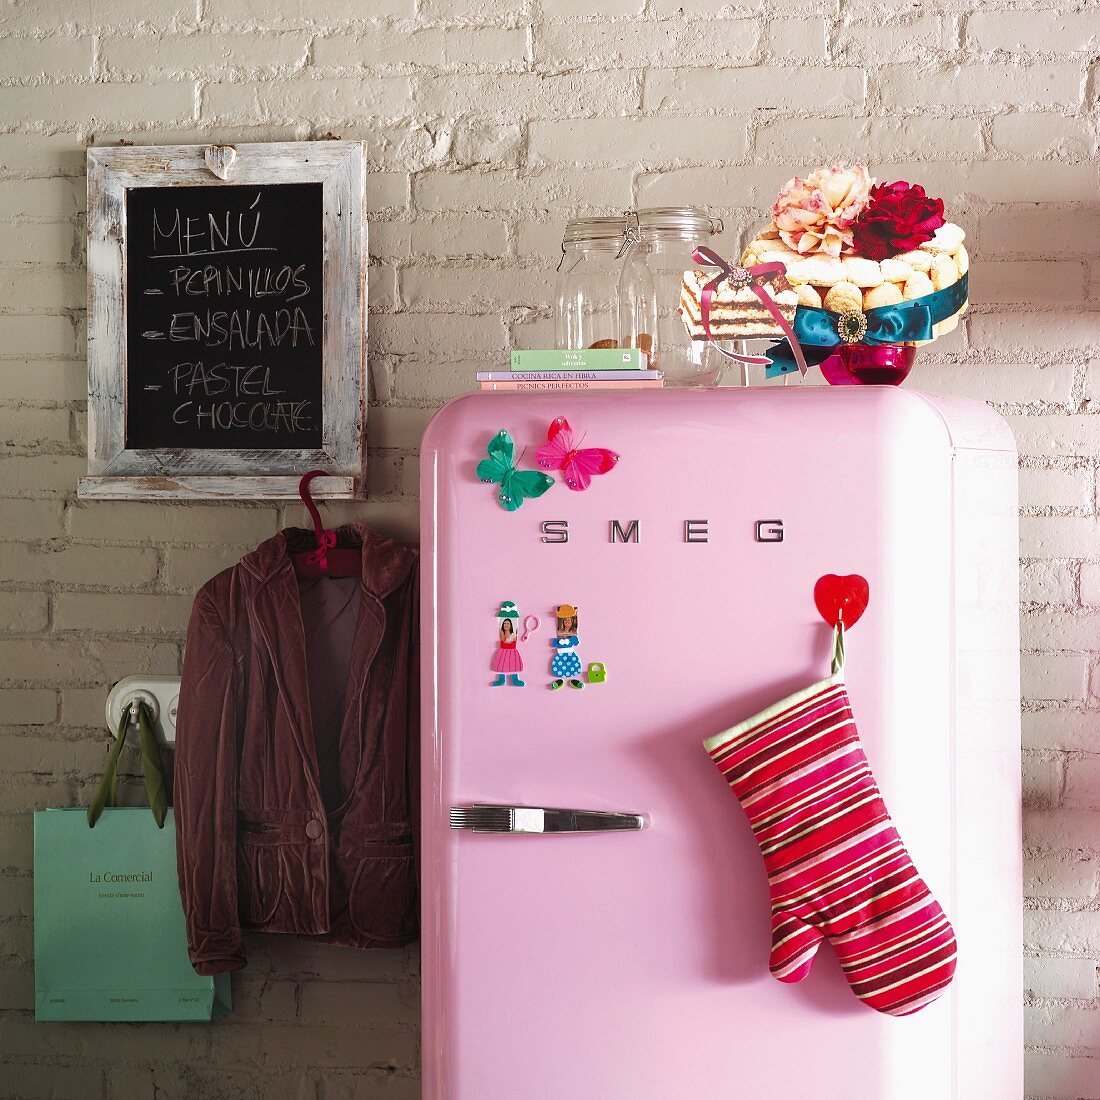 Pink fridge against brick wall